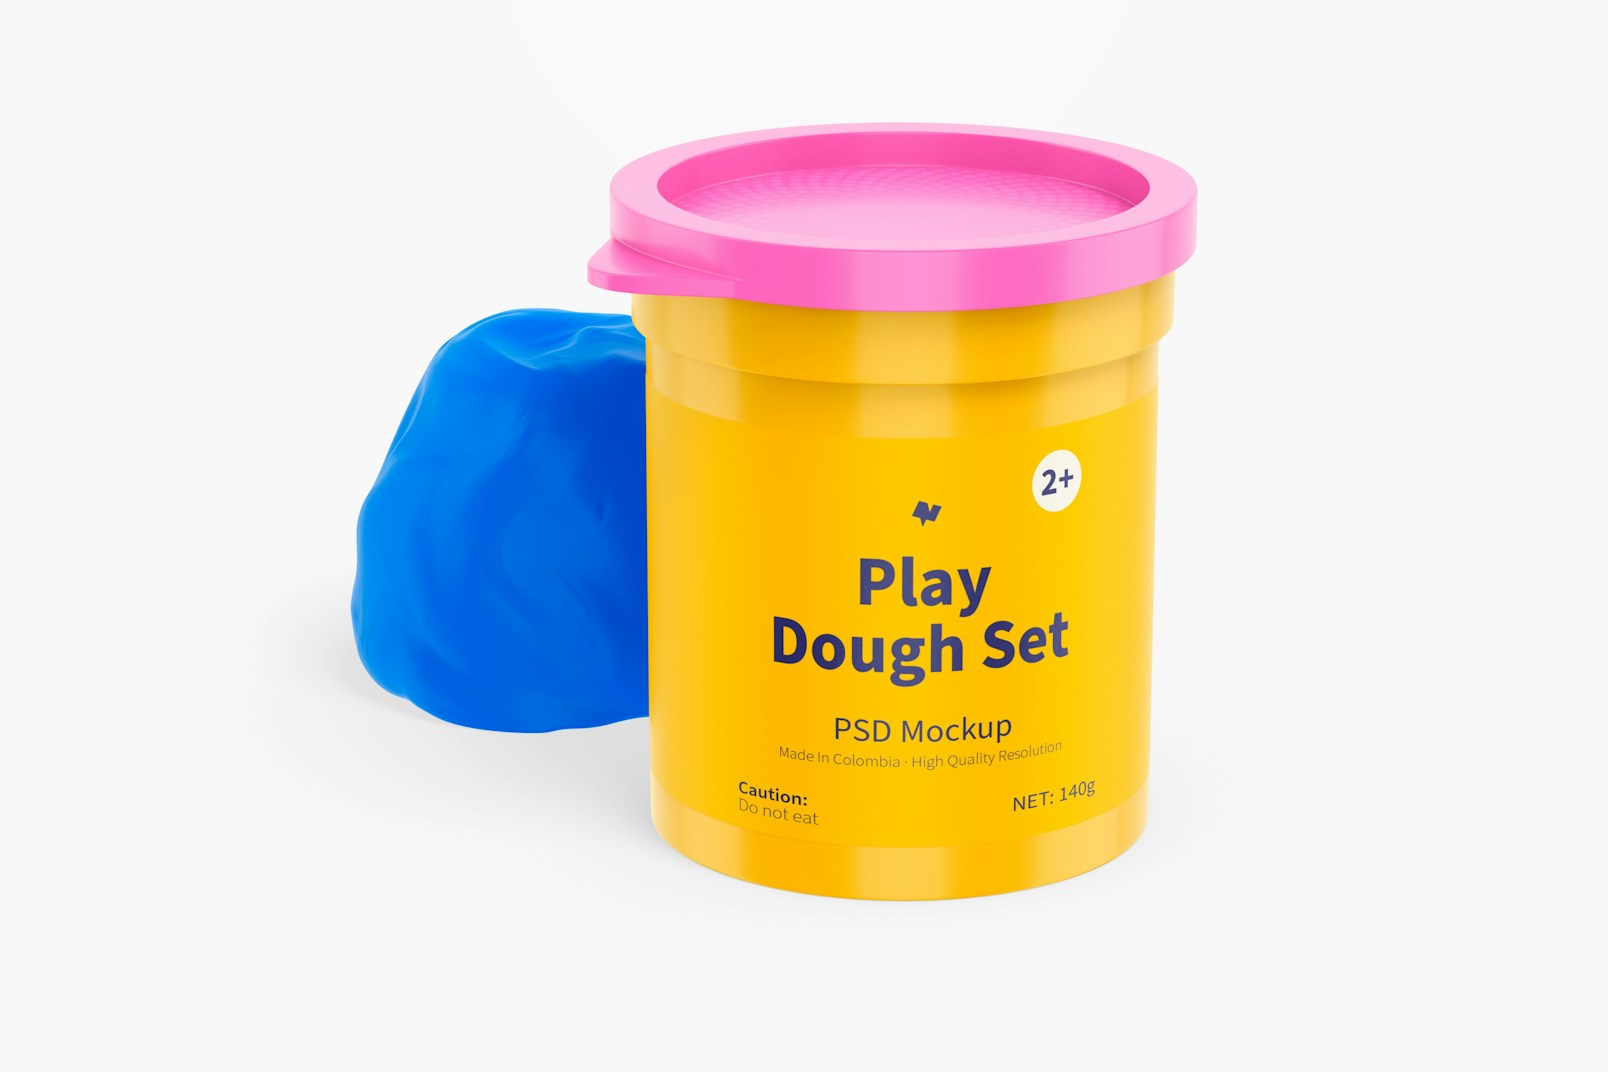 Play Dough Set Mockup, Front View